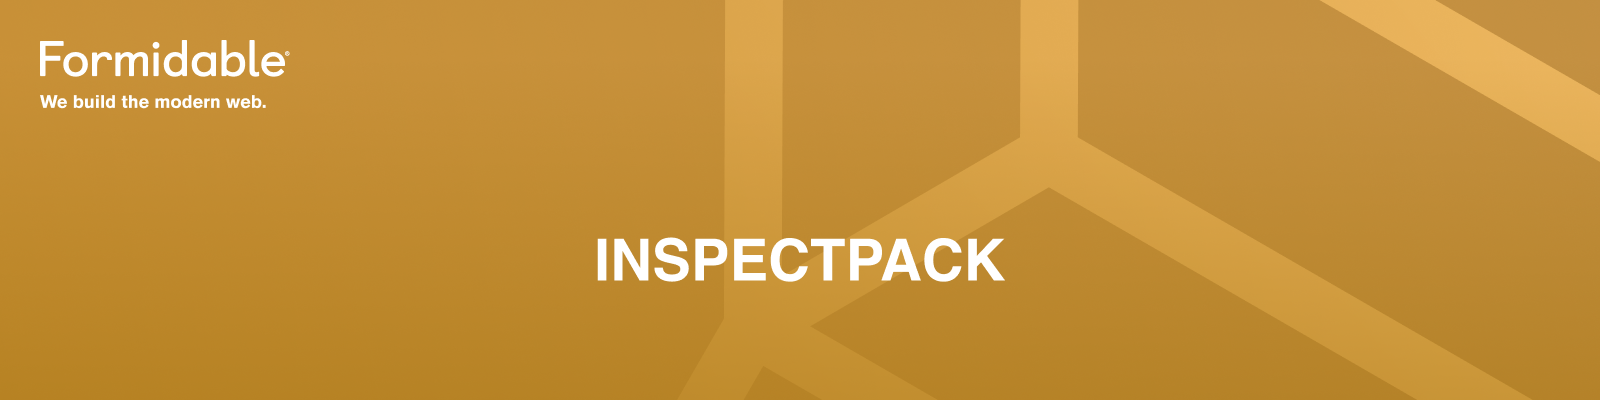 Inspectpack — Formidable, We build the modern web